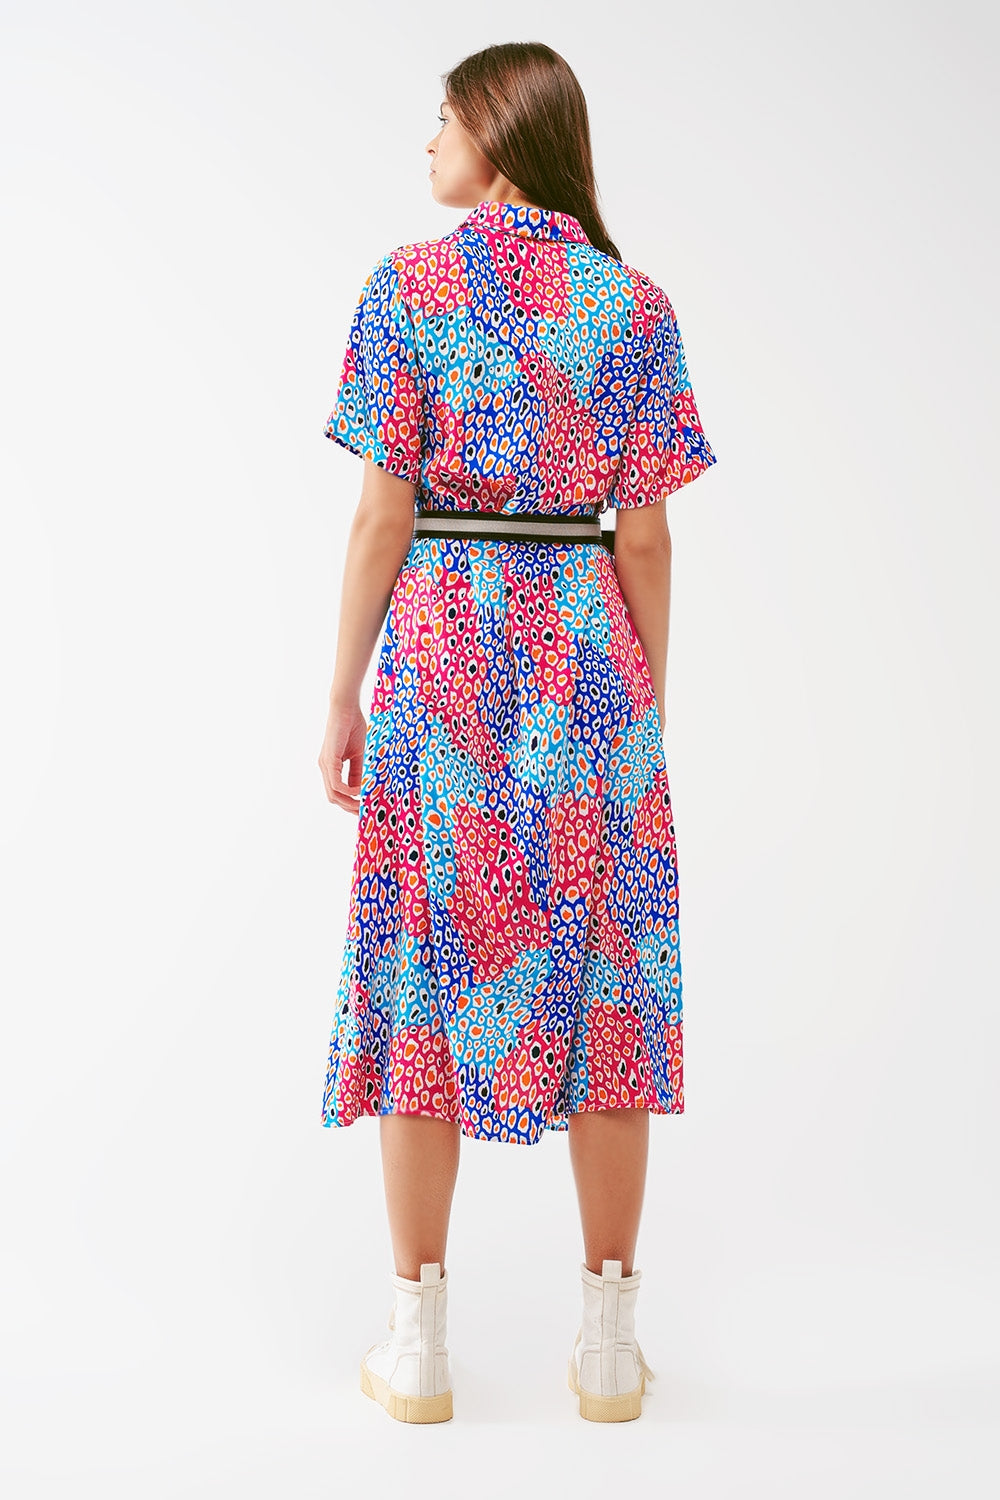 Midi Geo Printed short sleeve Dress - Szua Store